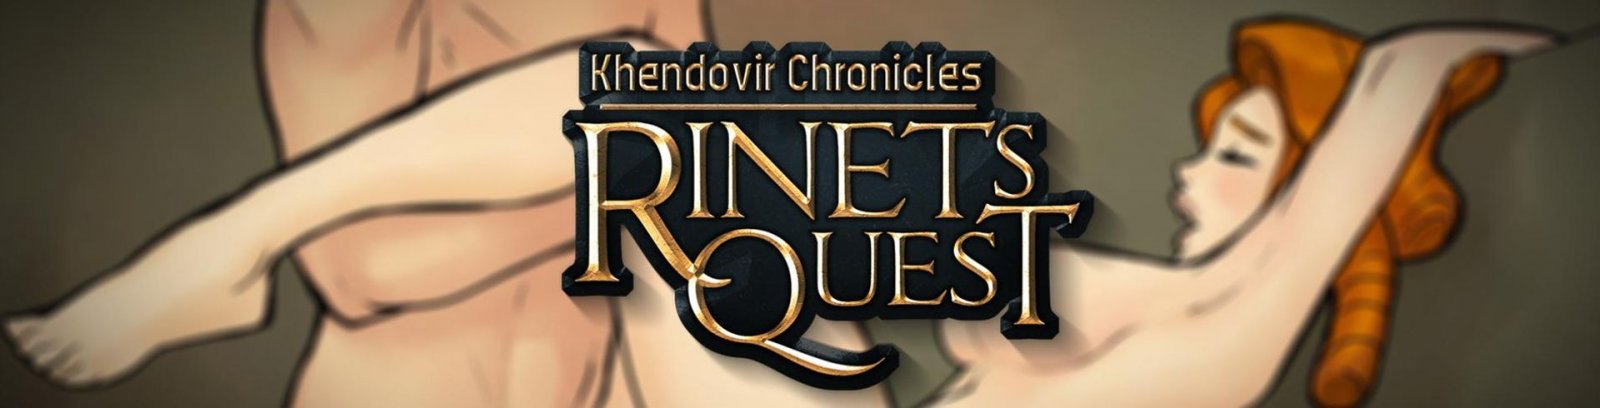 Khendovir Chronicles: Rinets Quest v0.15.01 by StalkerRoguen